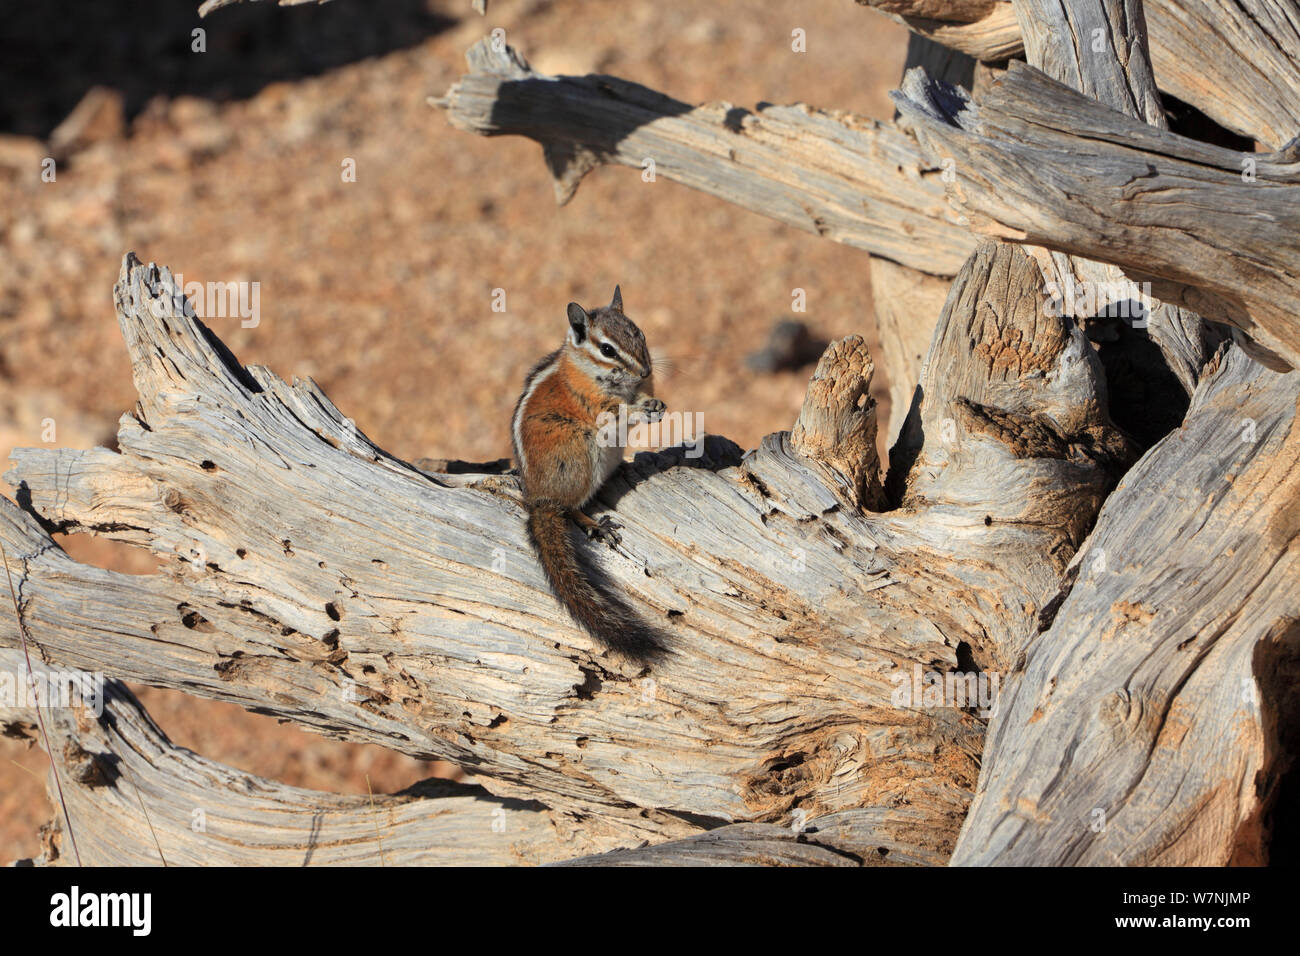 Scoiattolo striado Uinita (Eutamias umbrinus) su albero caduto il moncone, Bryce Canyon NP, Utah, Stati Uniti d'America Foto Stock